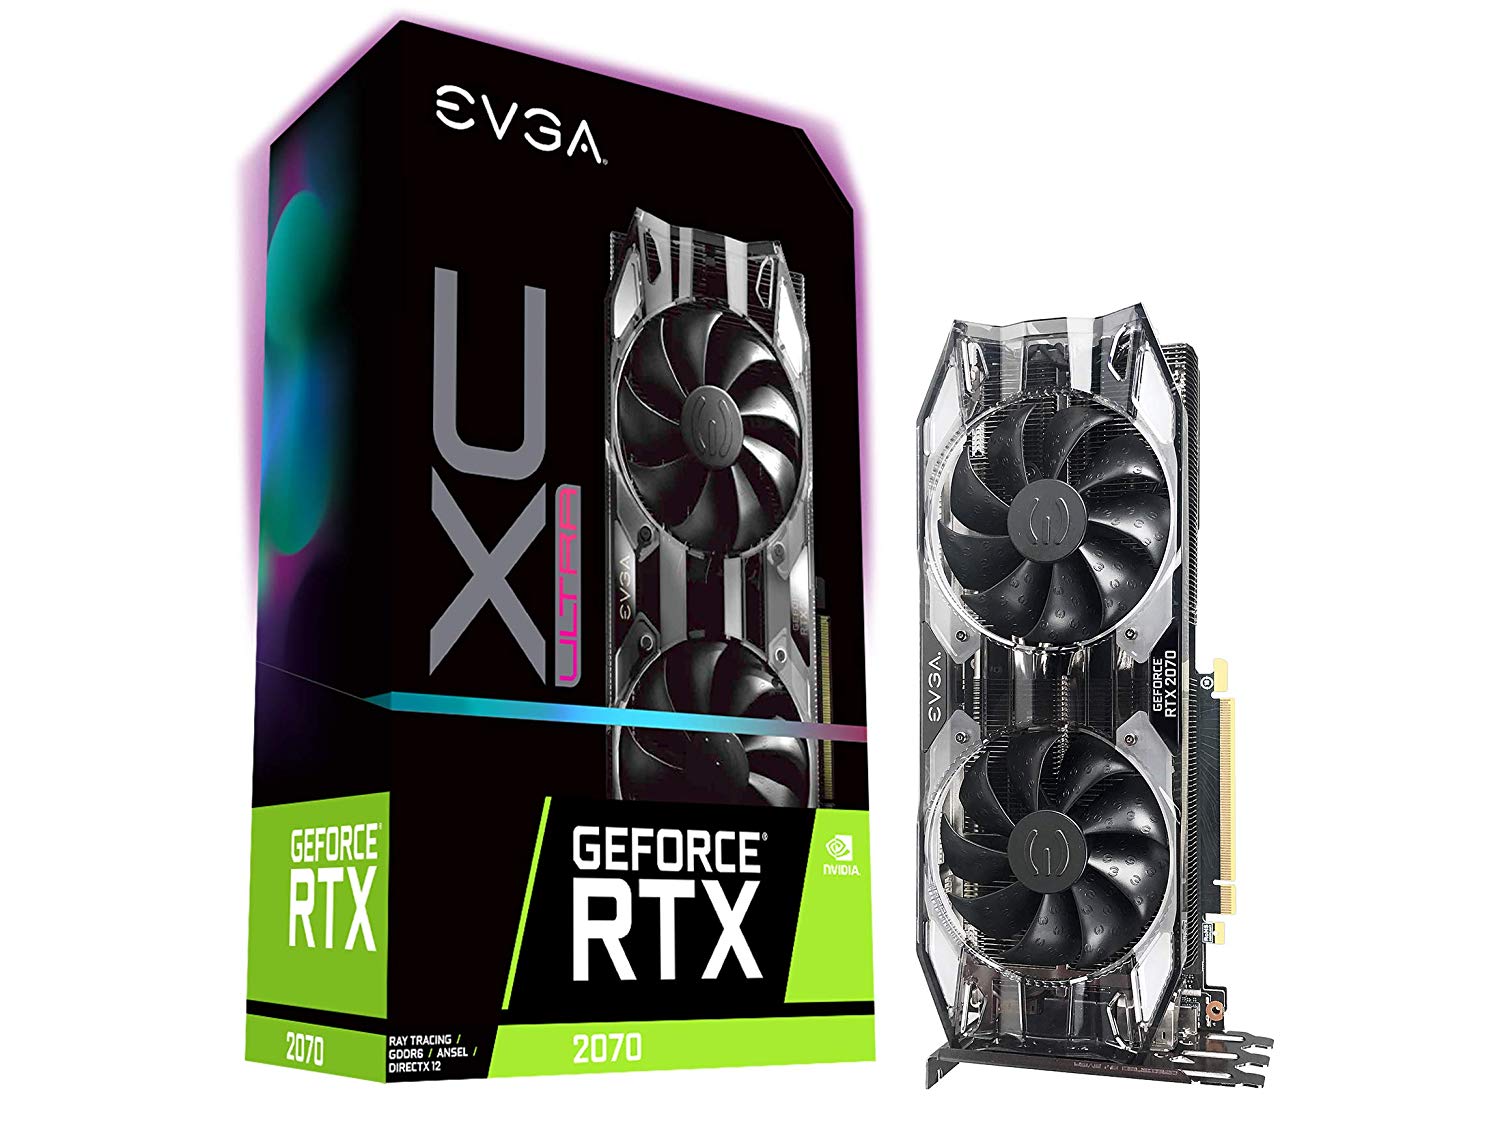 EVGA GeForce RTX 2070 XC Ultra Gaming, 8GB GDDR6, Dual HDB Fans & RGB LED Graphics Card